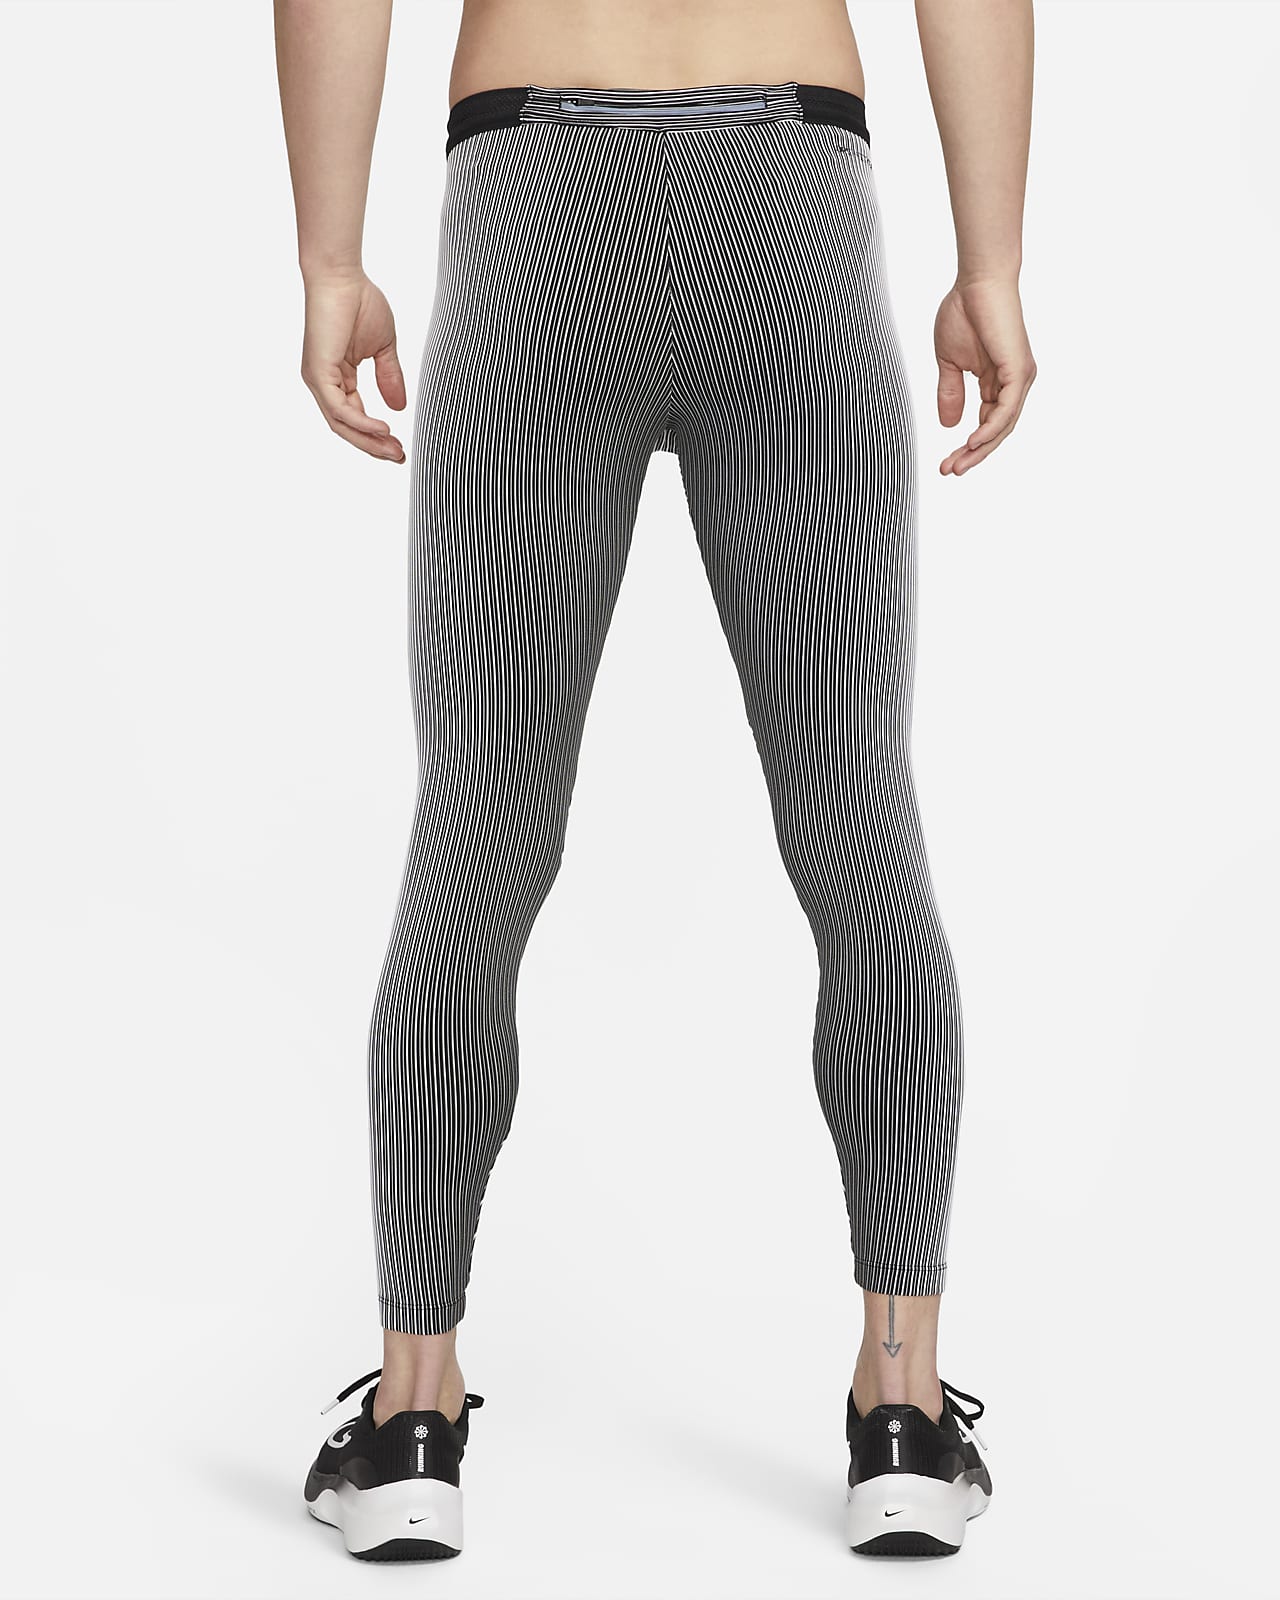 Nike Aeroswift tights, Men's Fashion, Activewear on Carousell